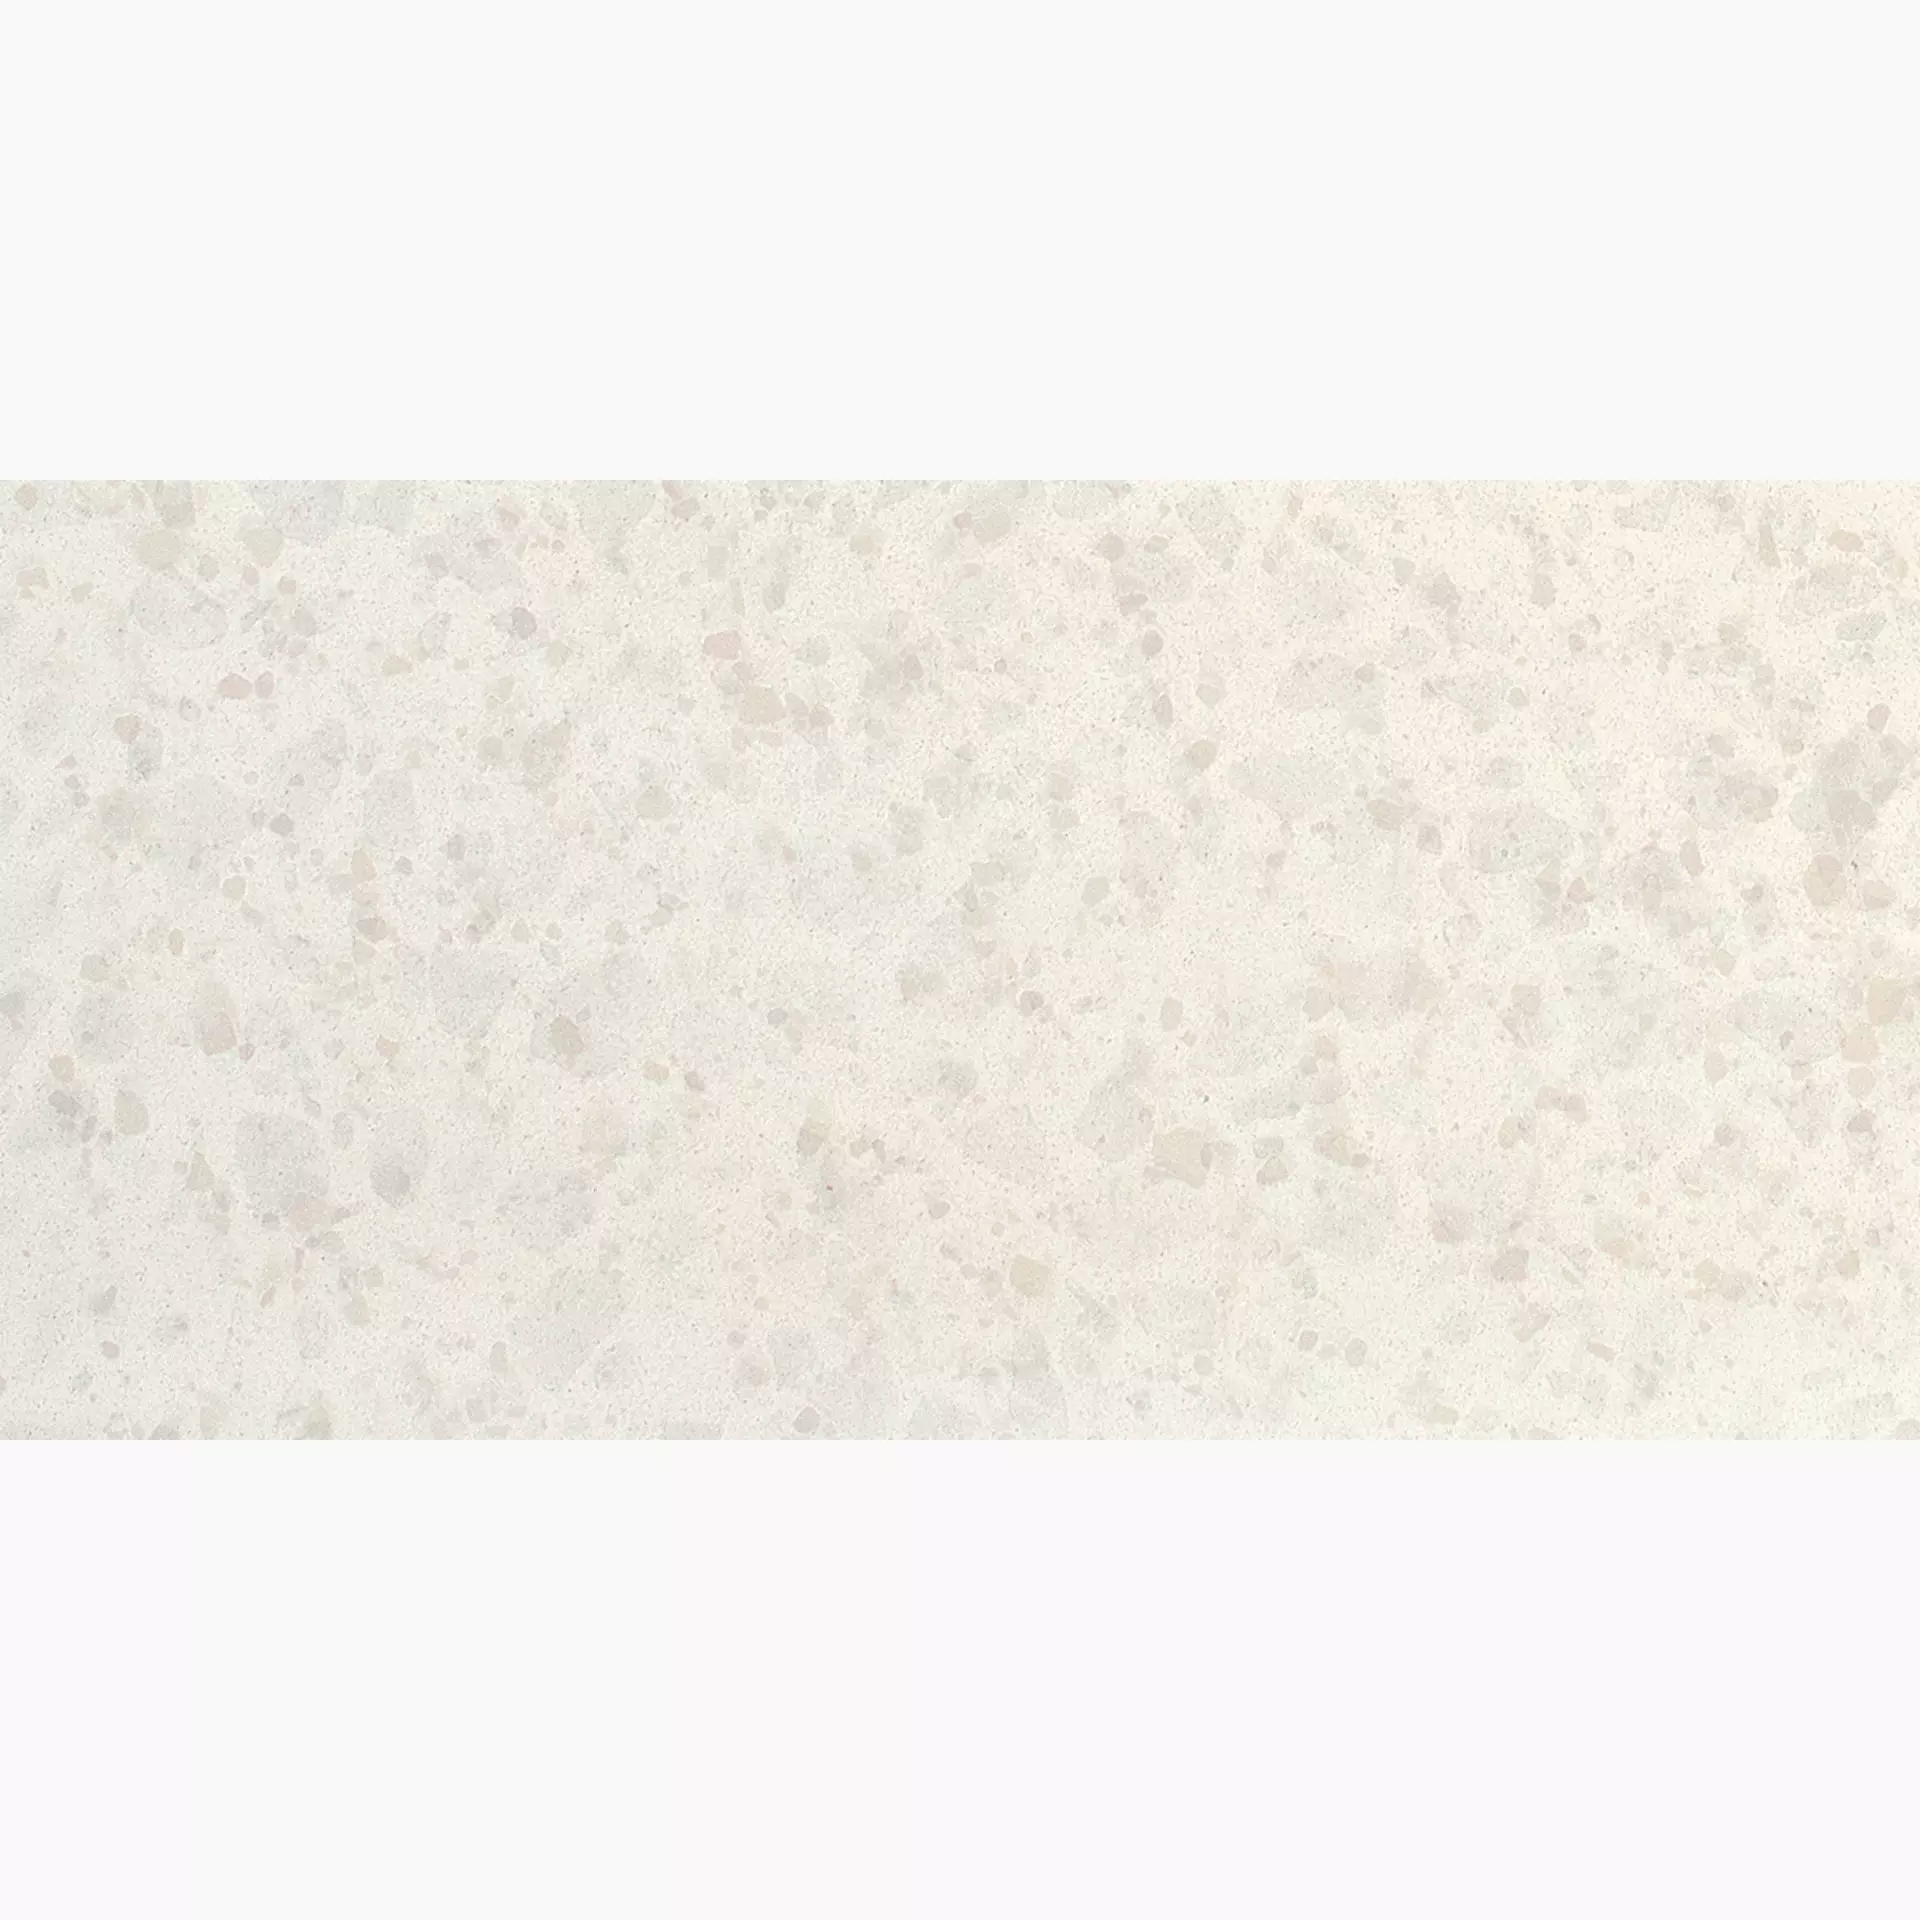 Gigacer Inclusioni Soave Bianco Perla Bocciardato Bianco Perla 12INCL3060BIAPERBOC gehaemmert 30x60cm 12mm